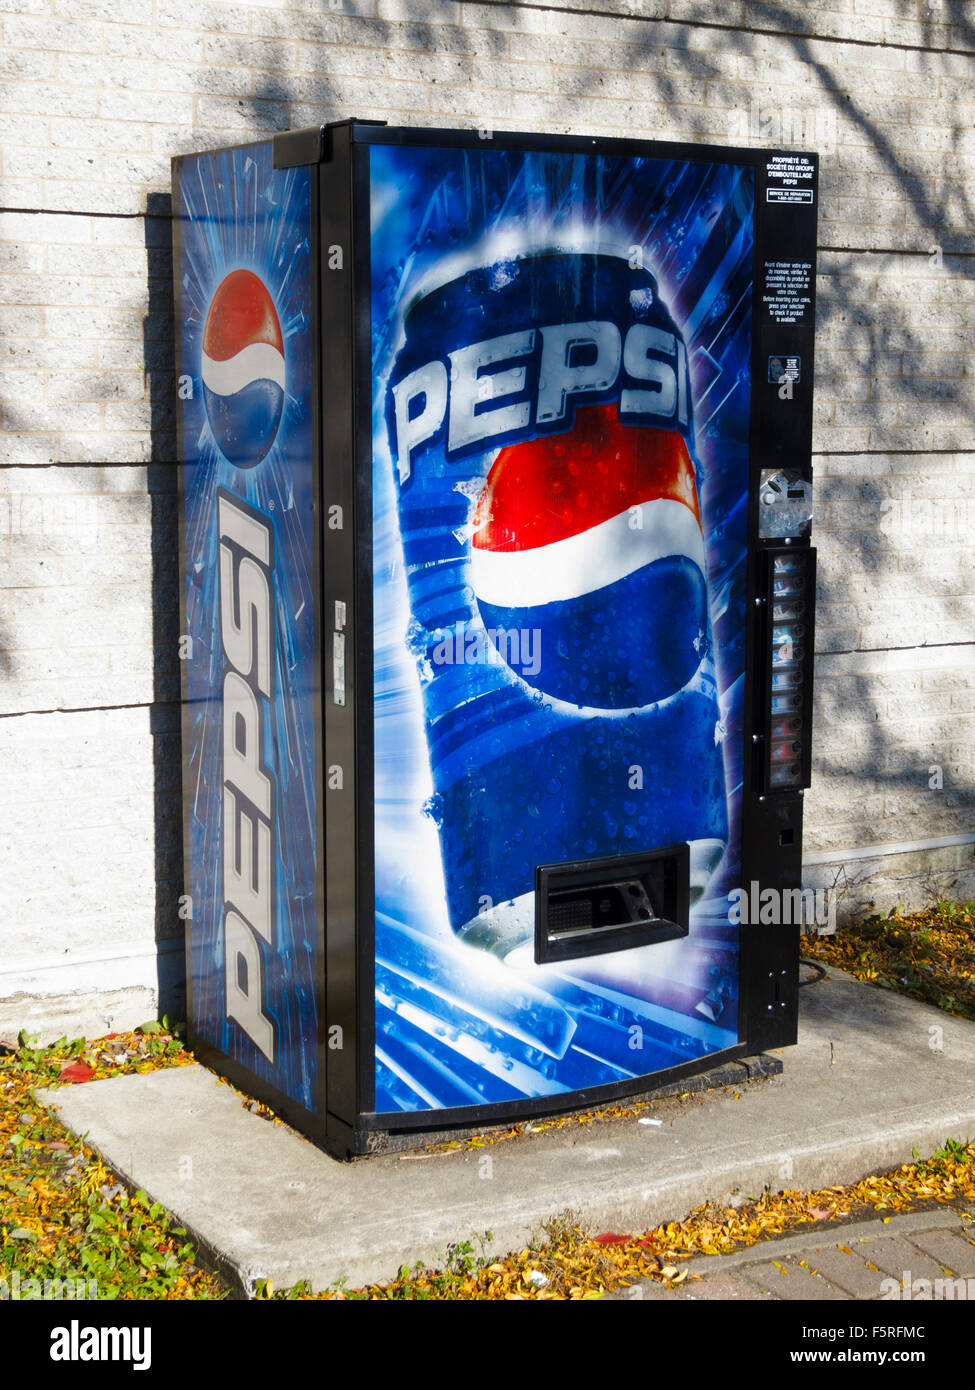 Pepsi vending machine Stock Photo